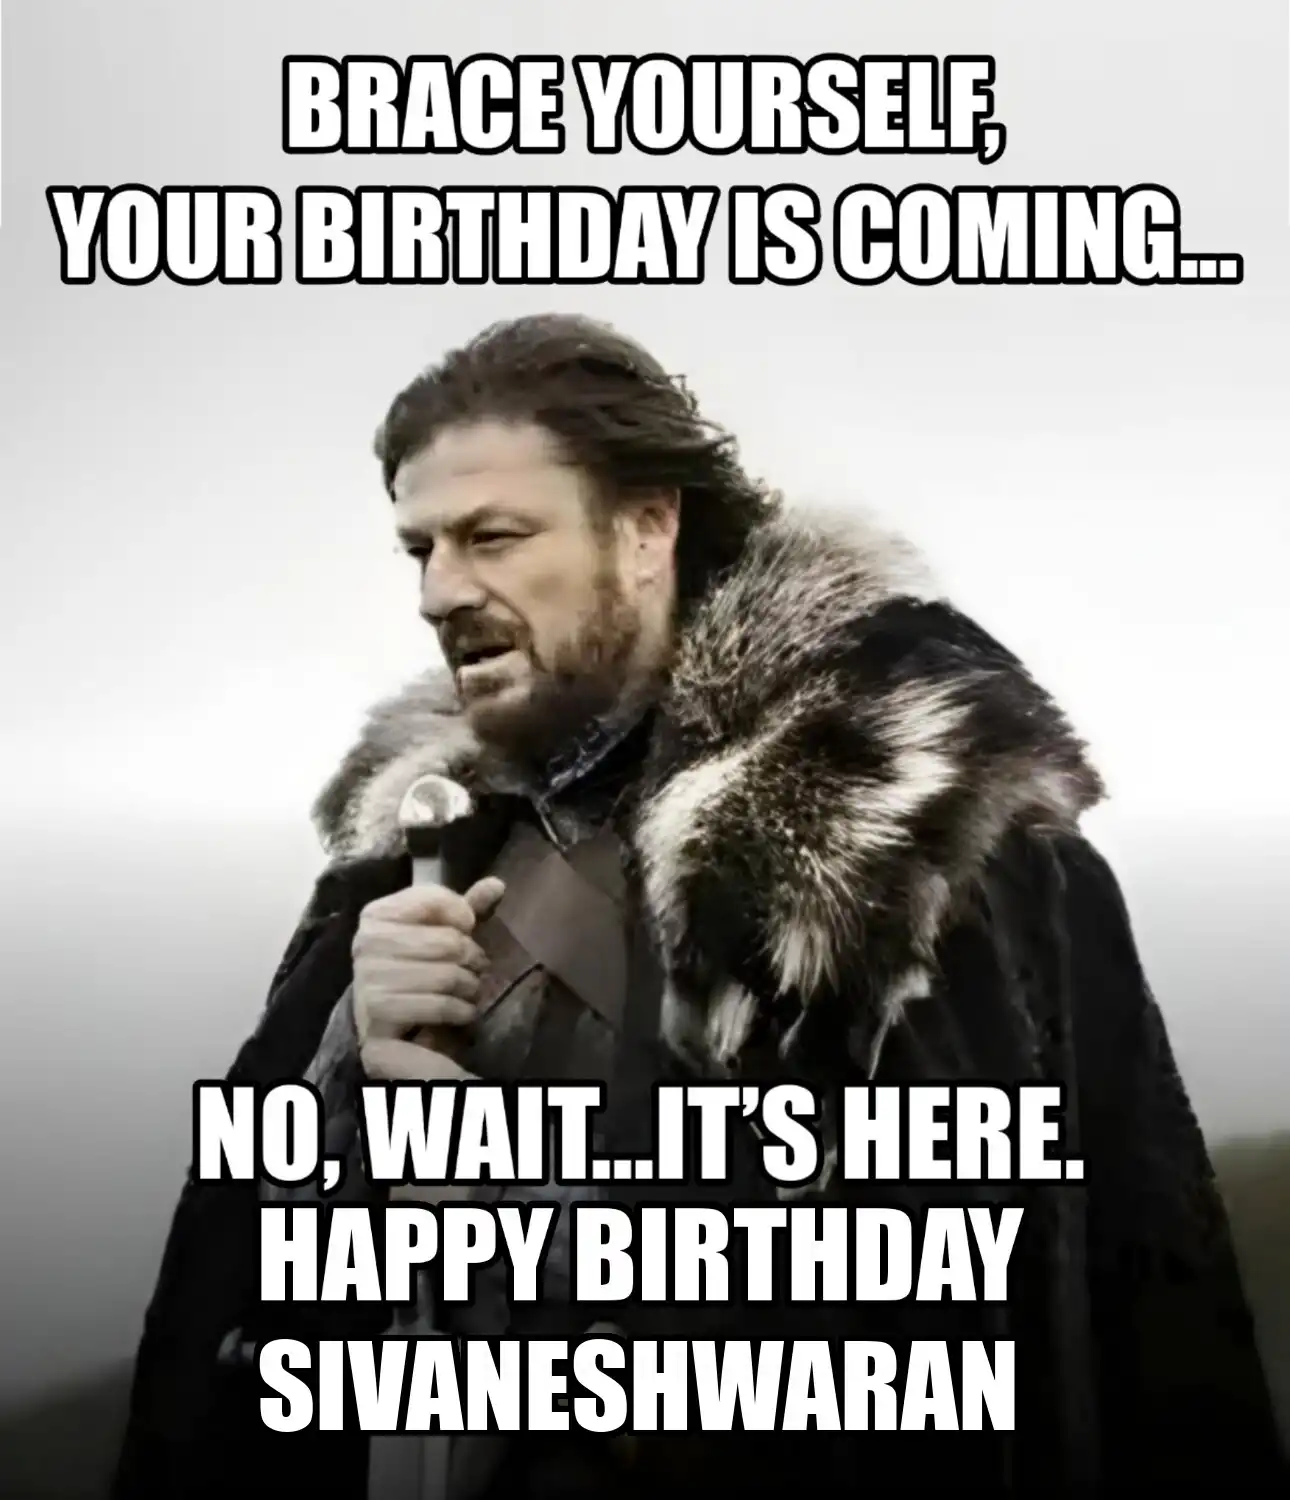 Happy Birthday Sivaneshwaran Brace Yourself Your Birthday Is Coming Meme